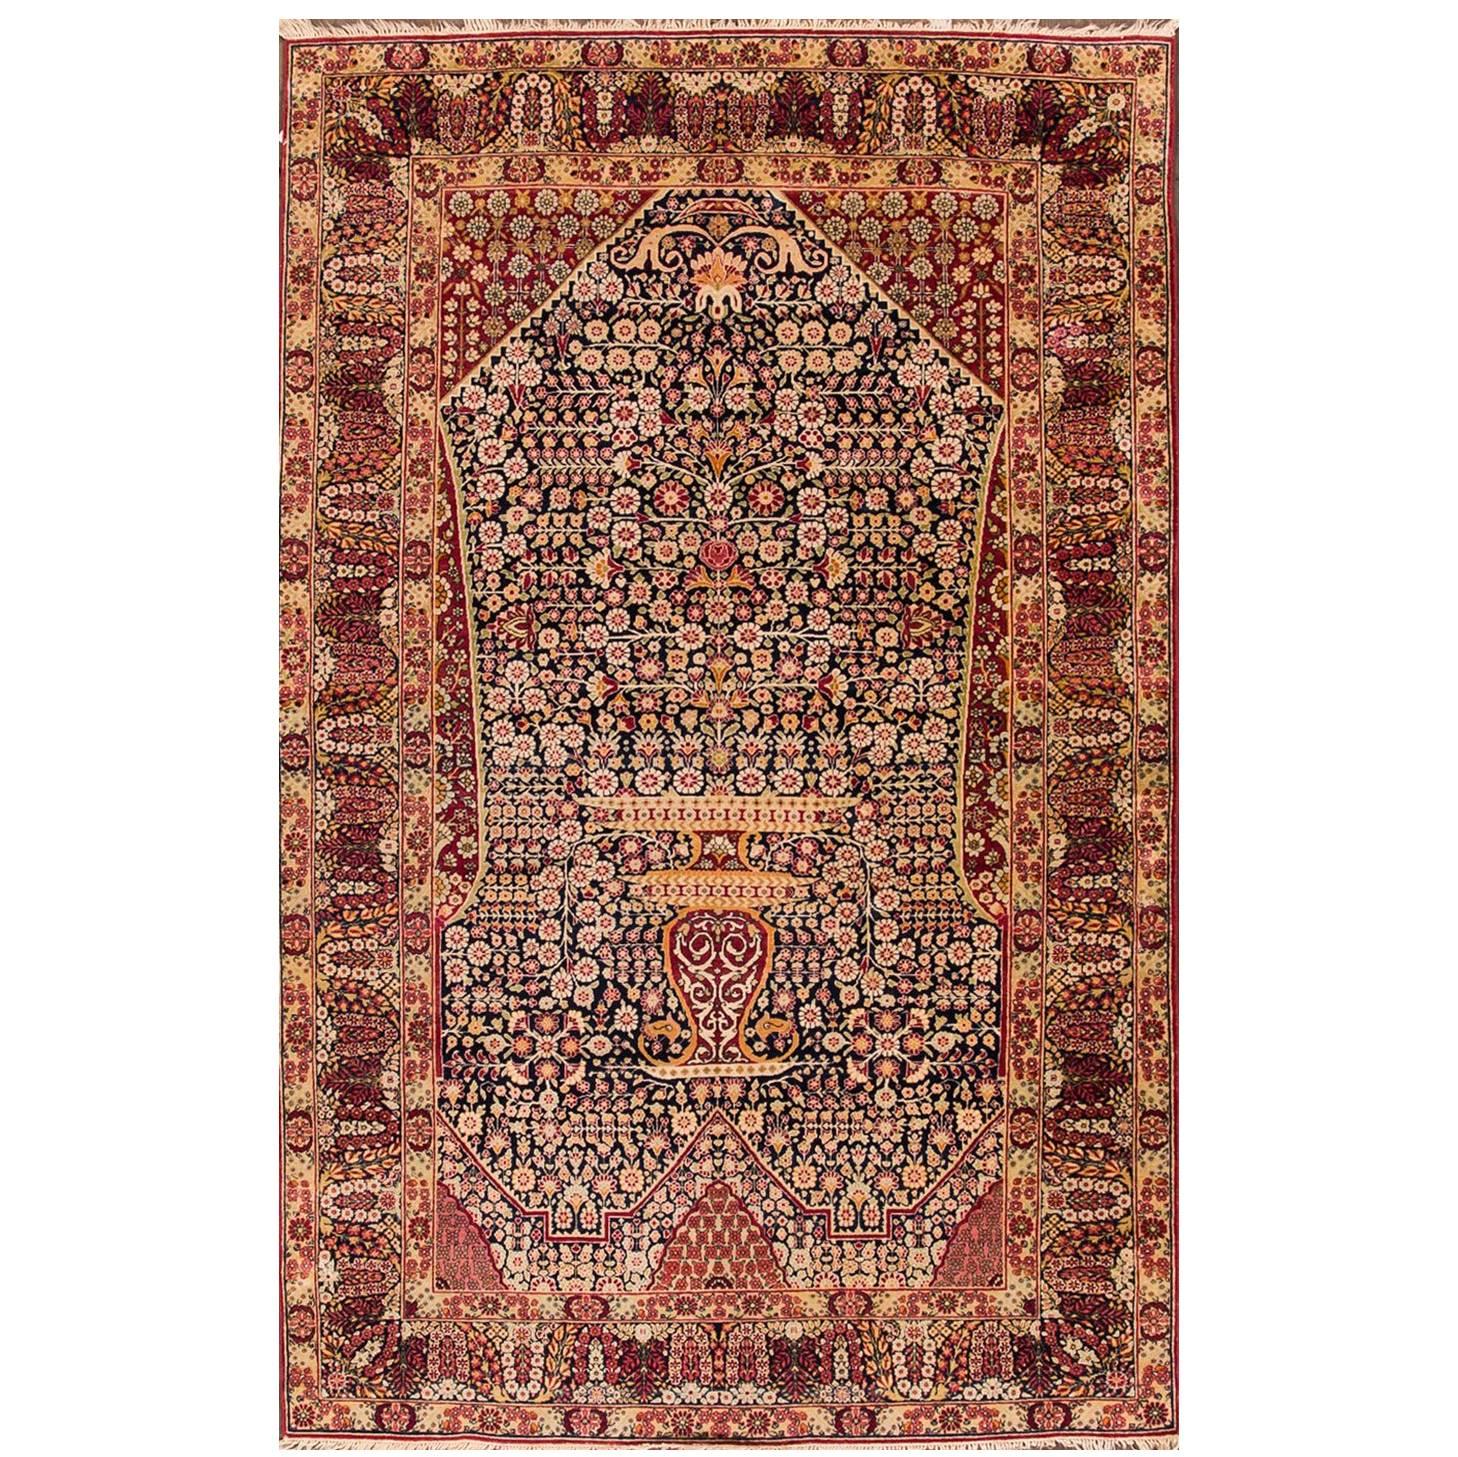 Early 20th Century Salmon/Blue Persian Kerman Carpet For Sale